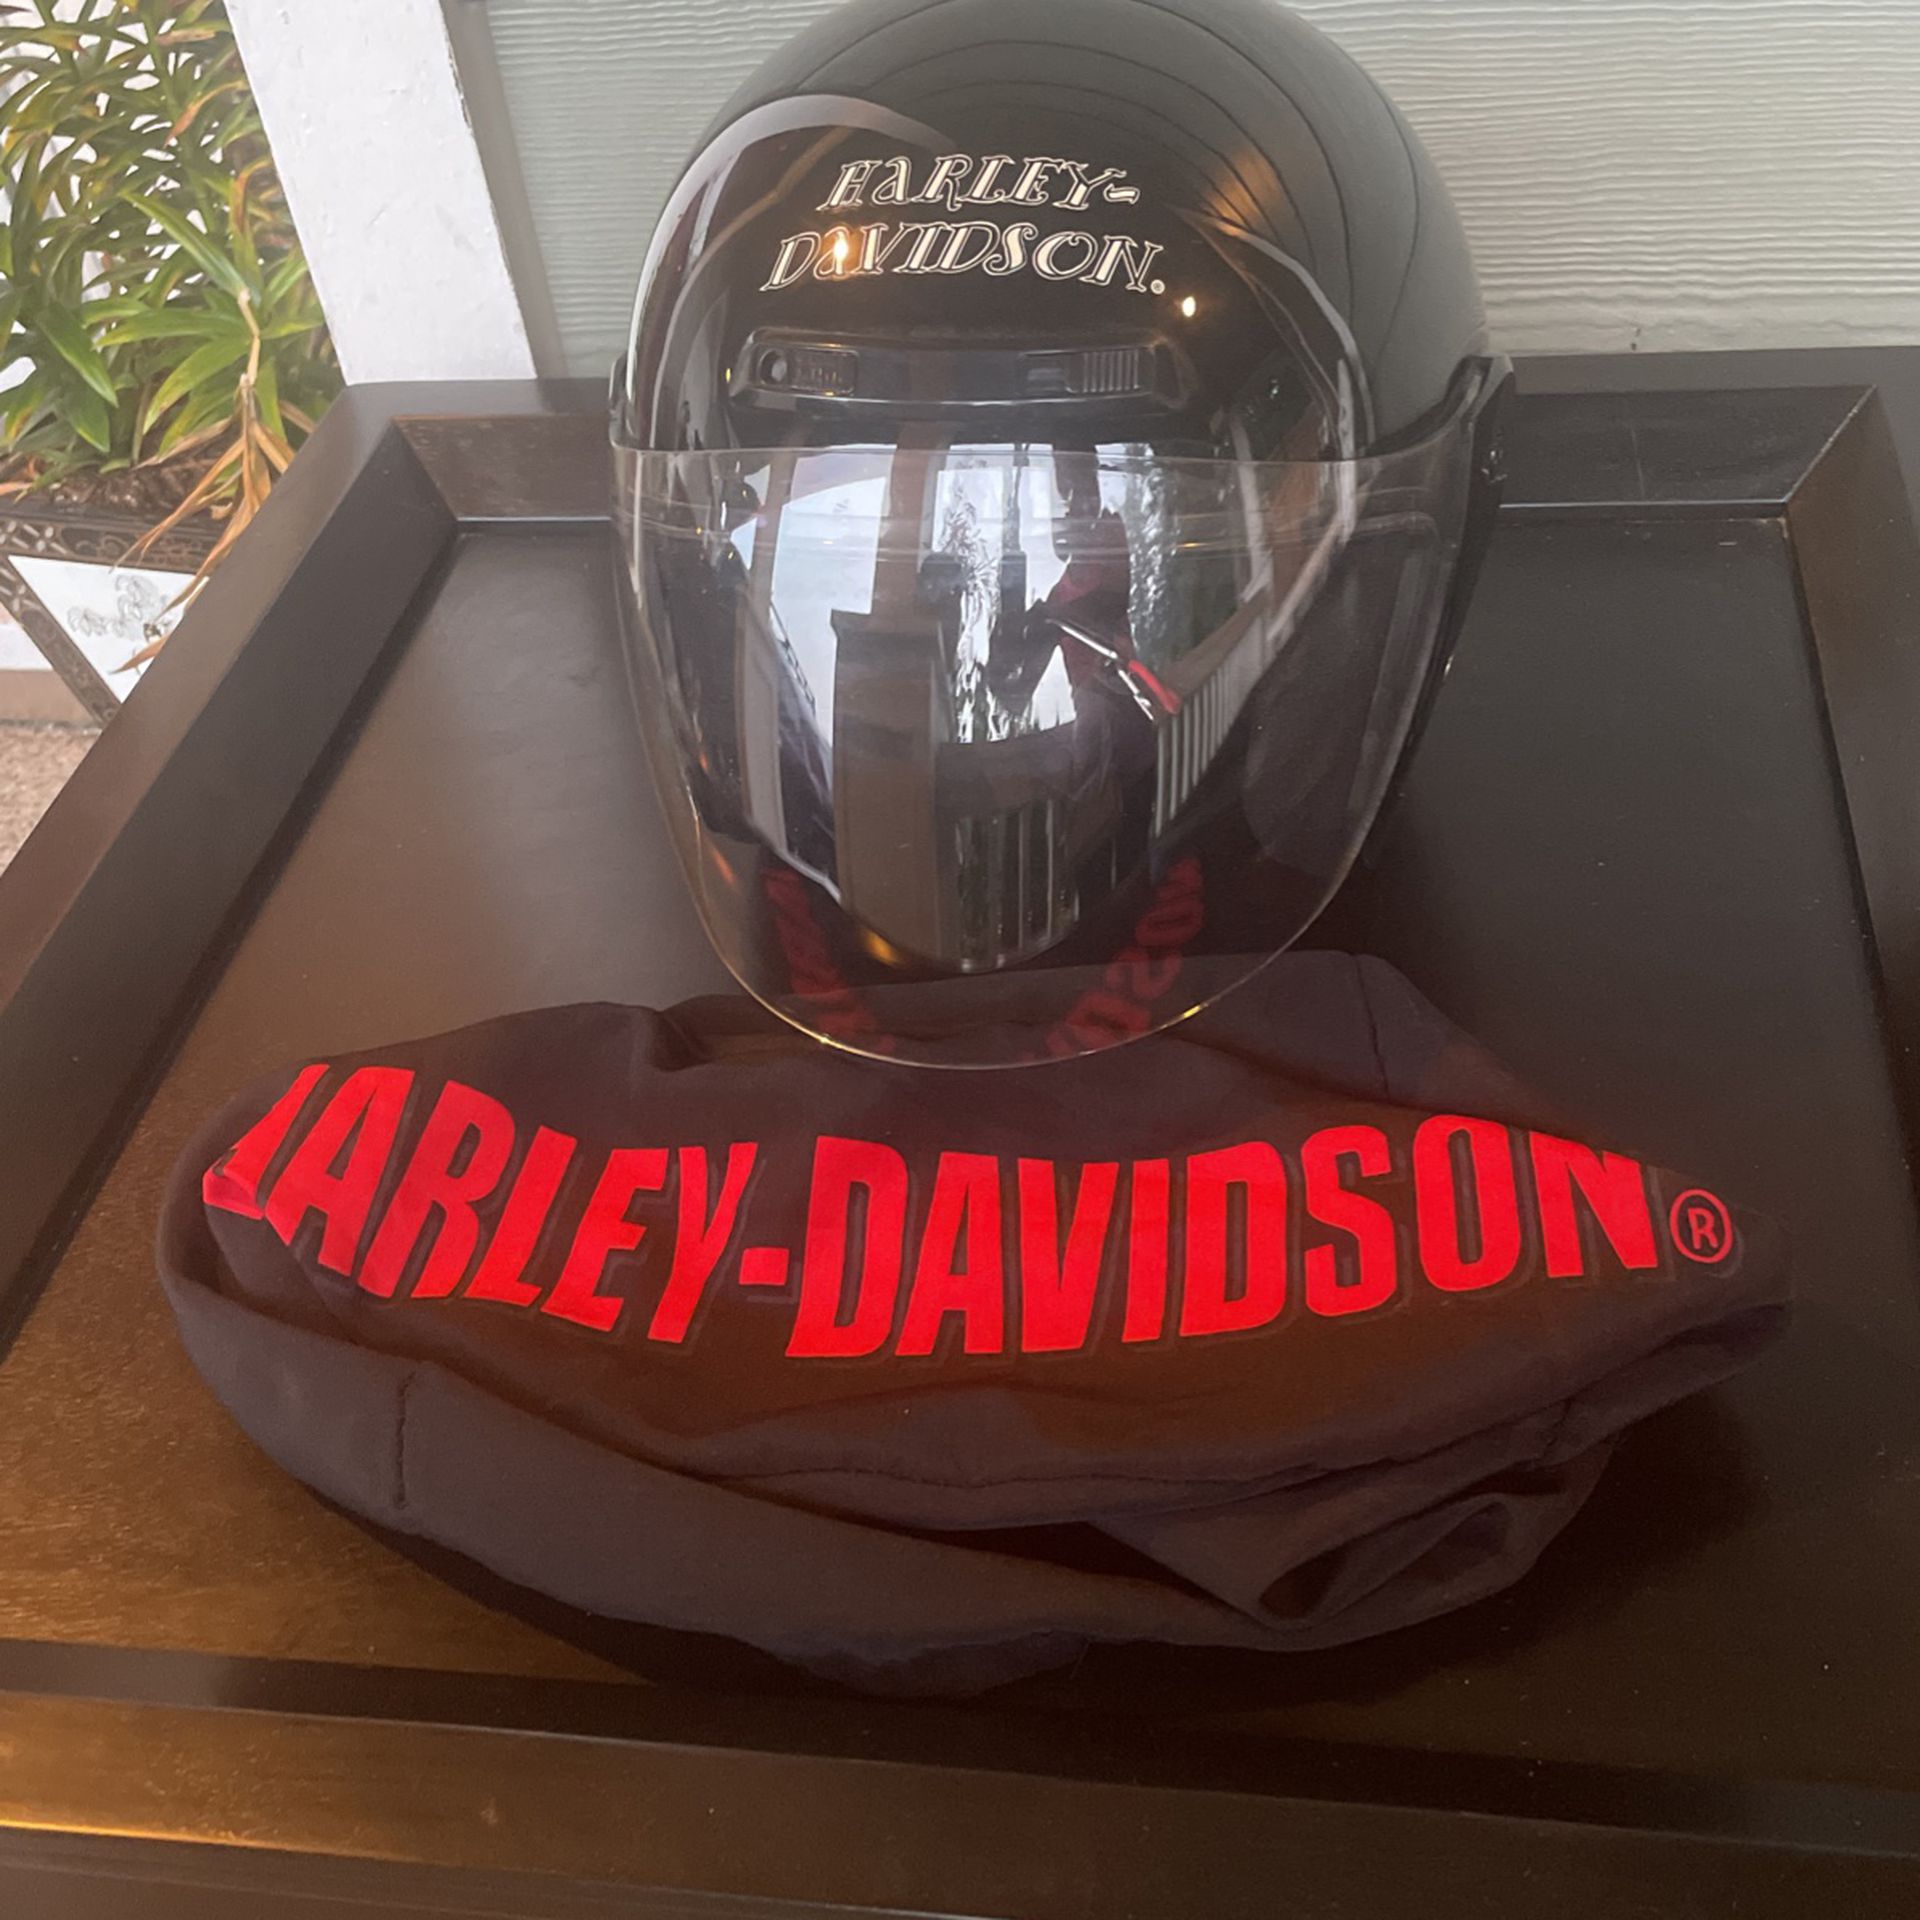 Hardly Davidson Motorcycle helmet